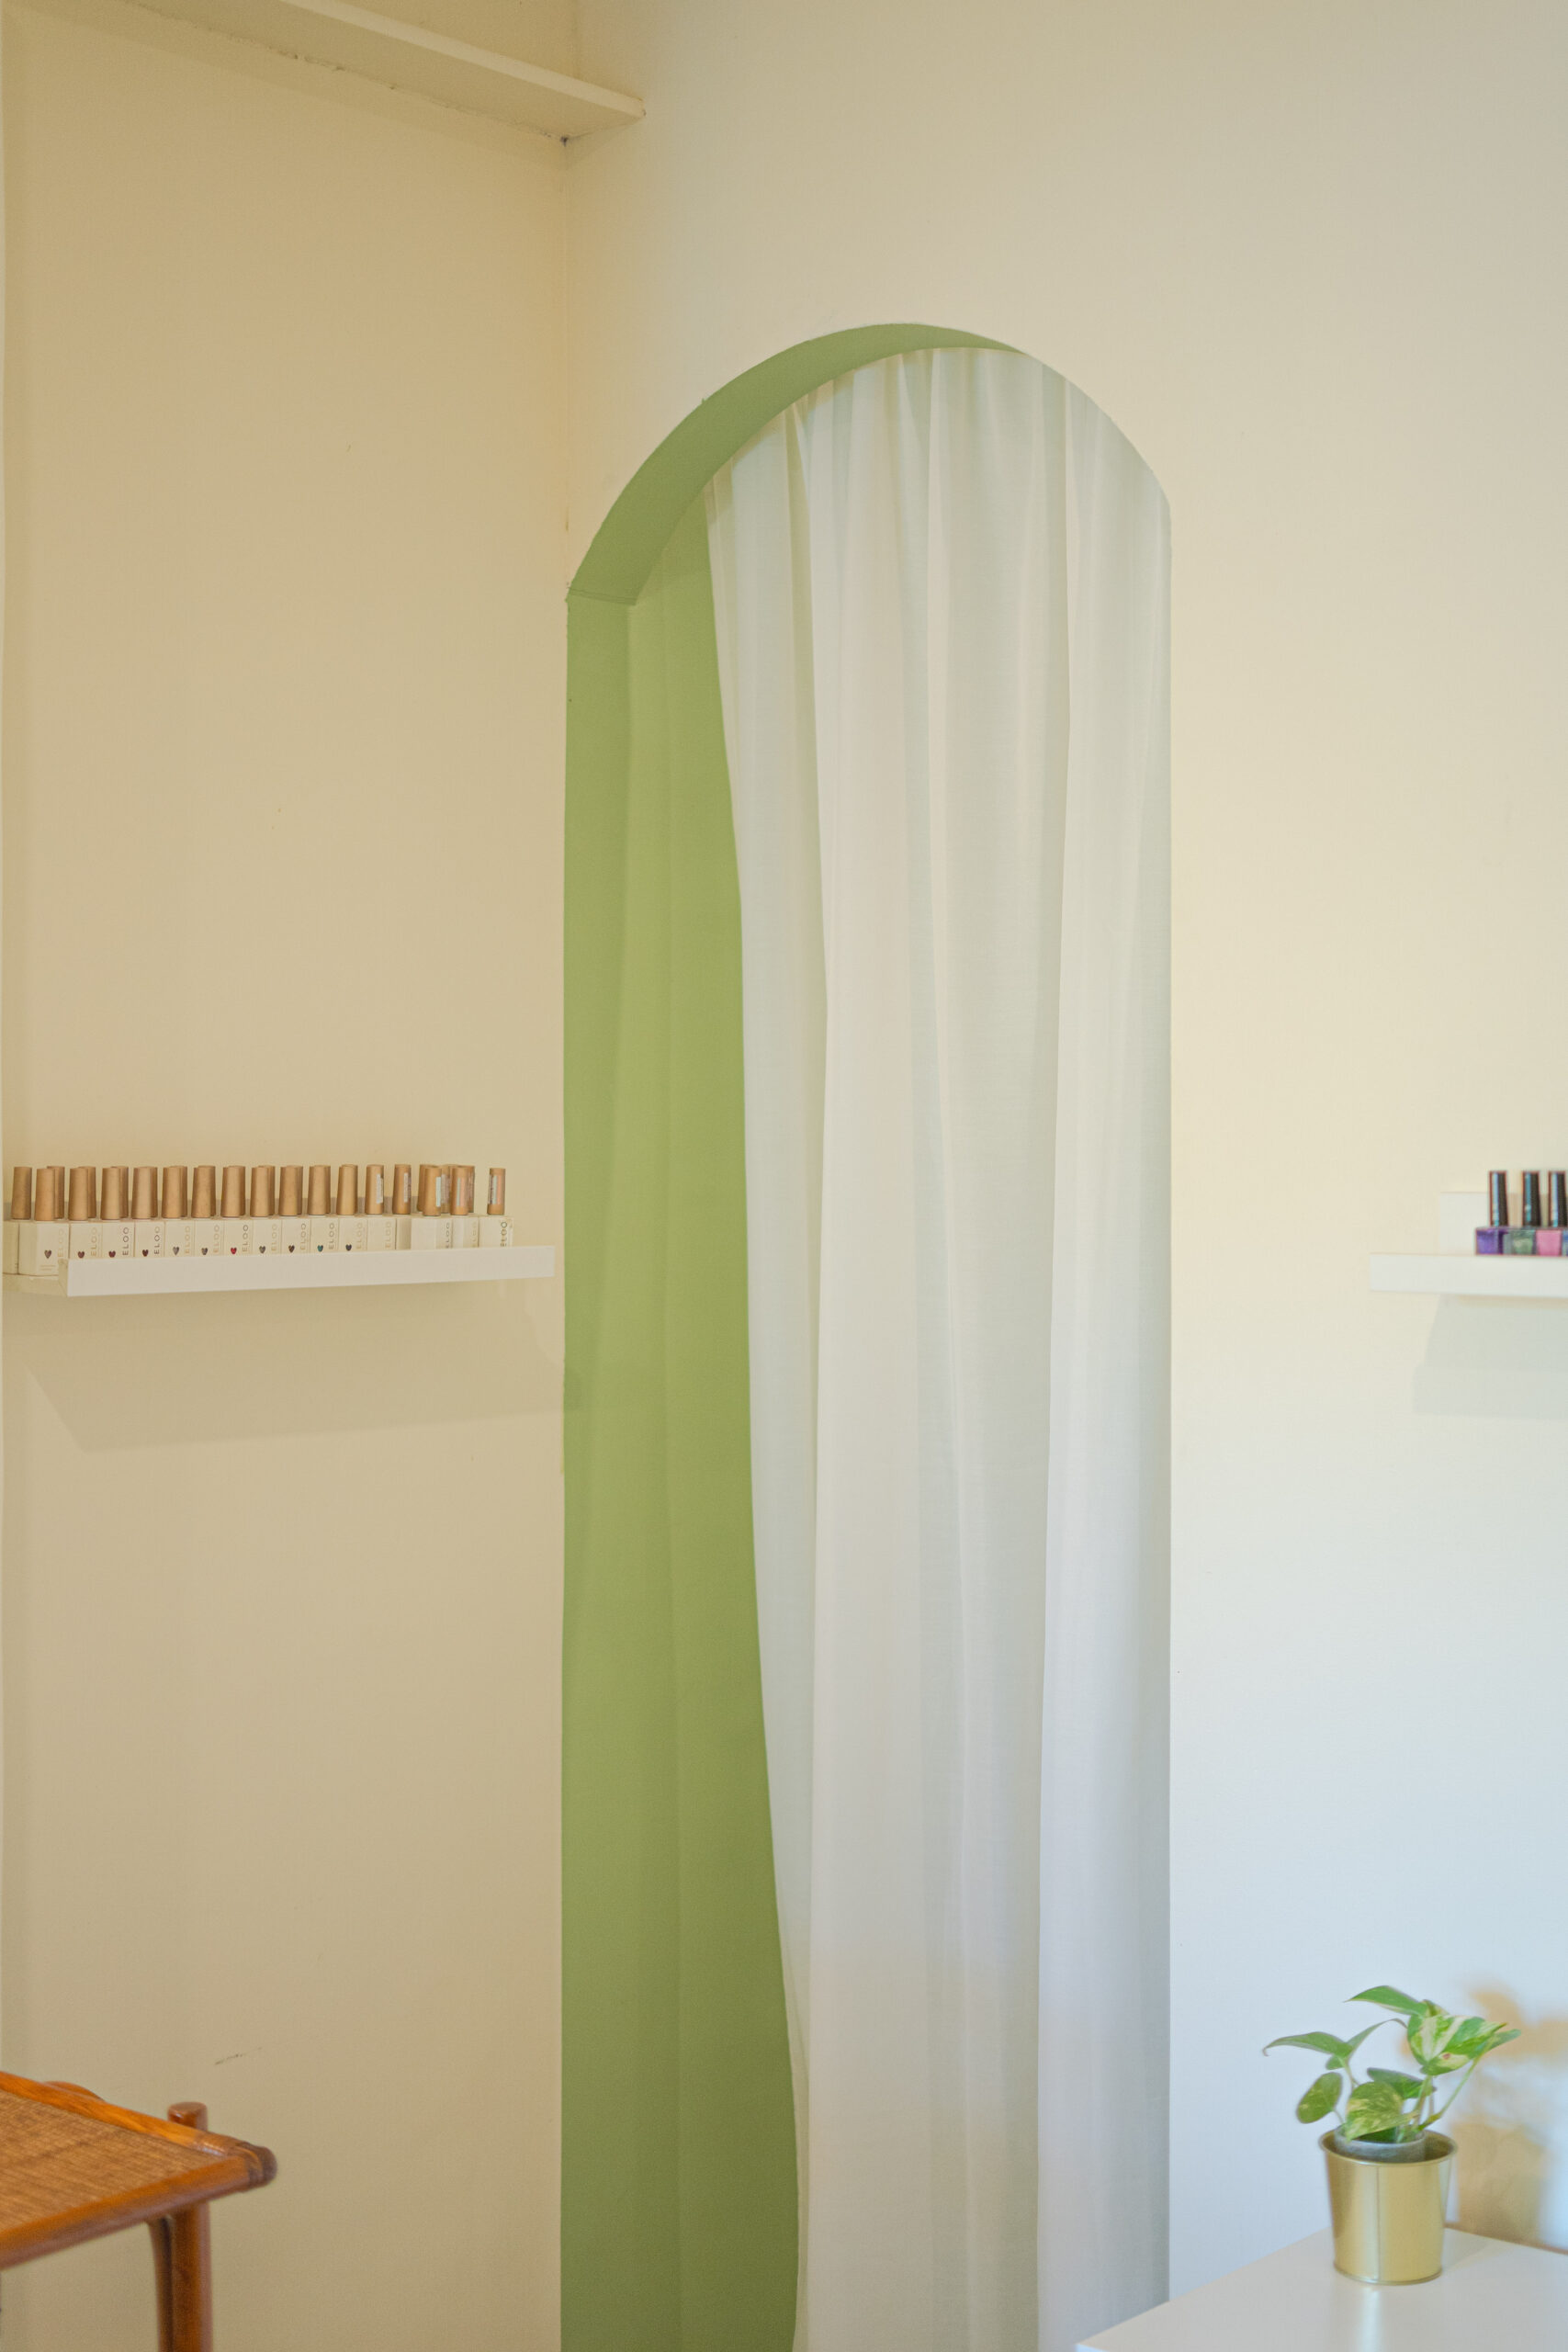 private massage room light designs